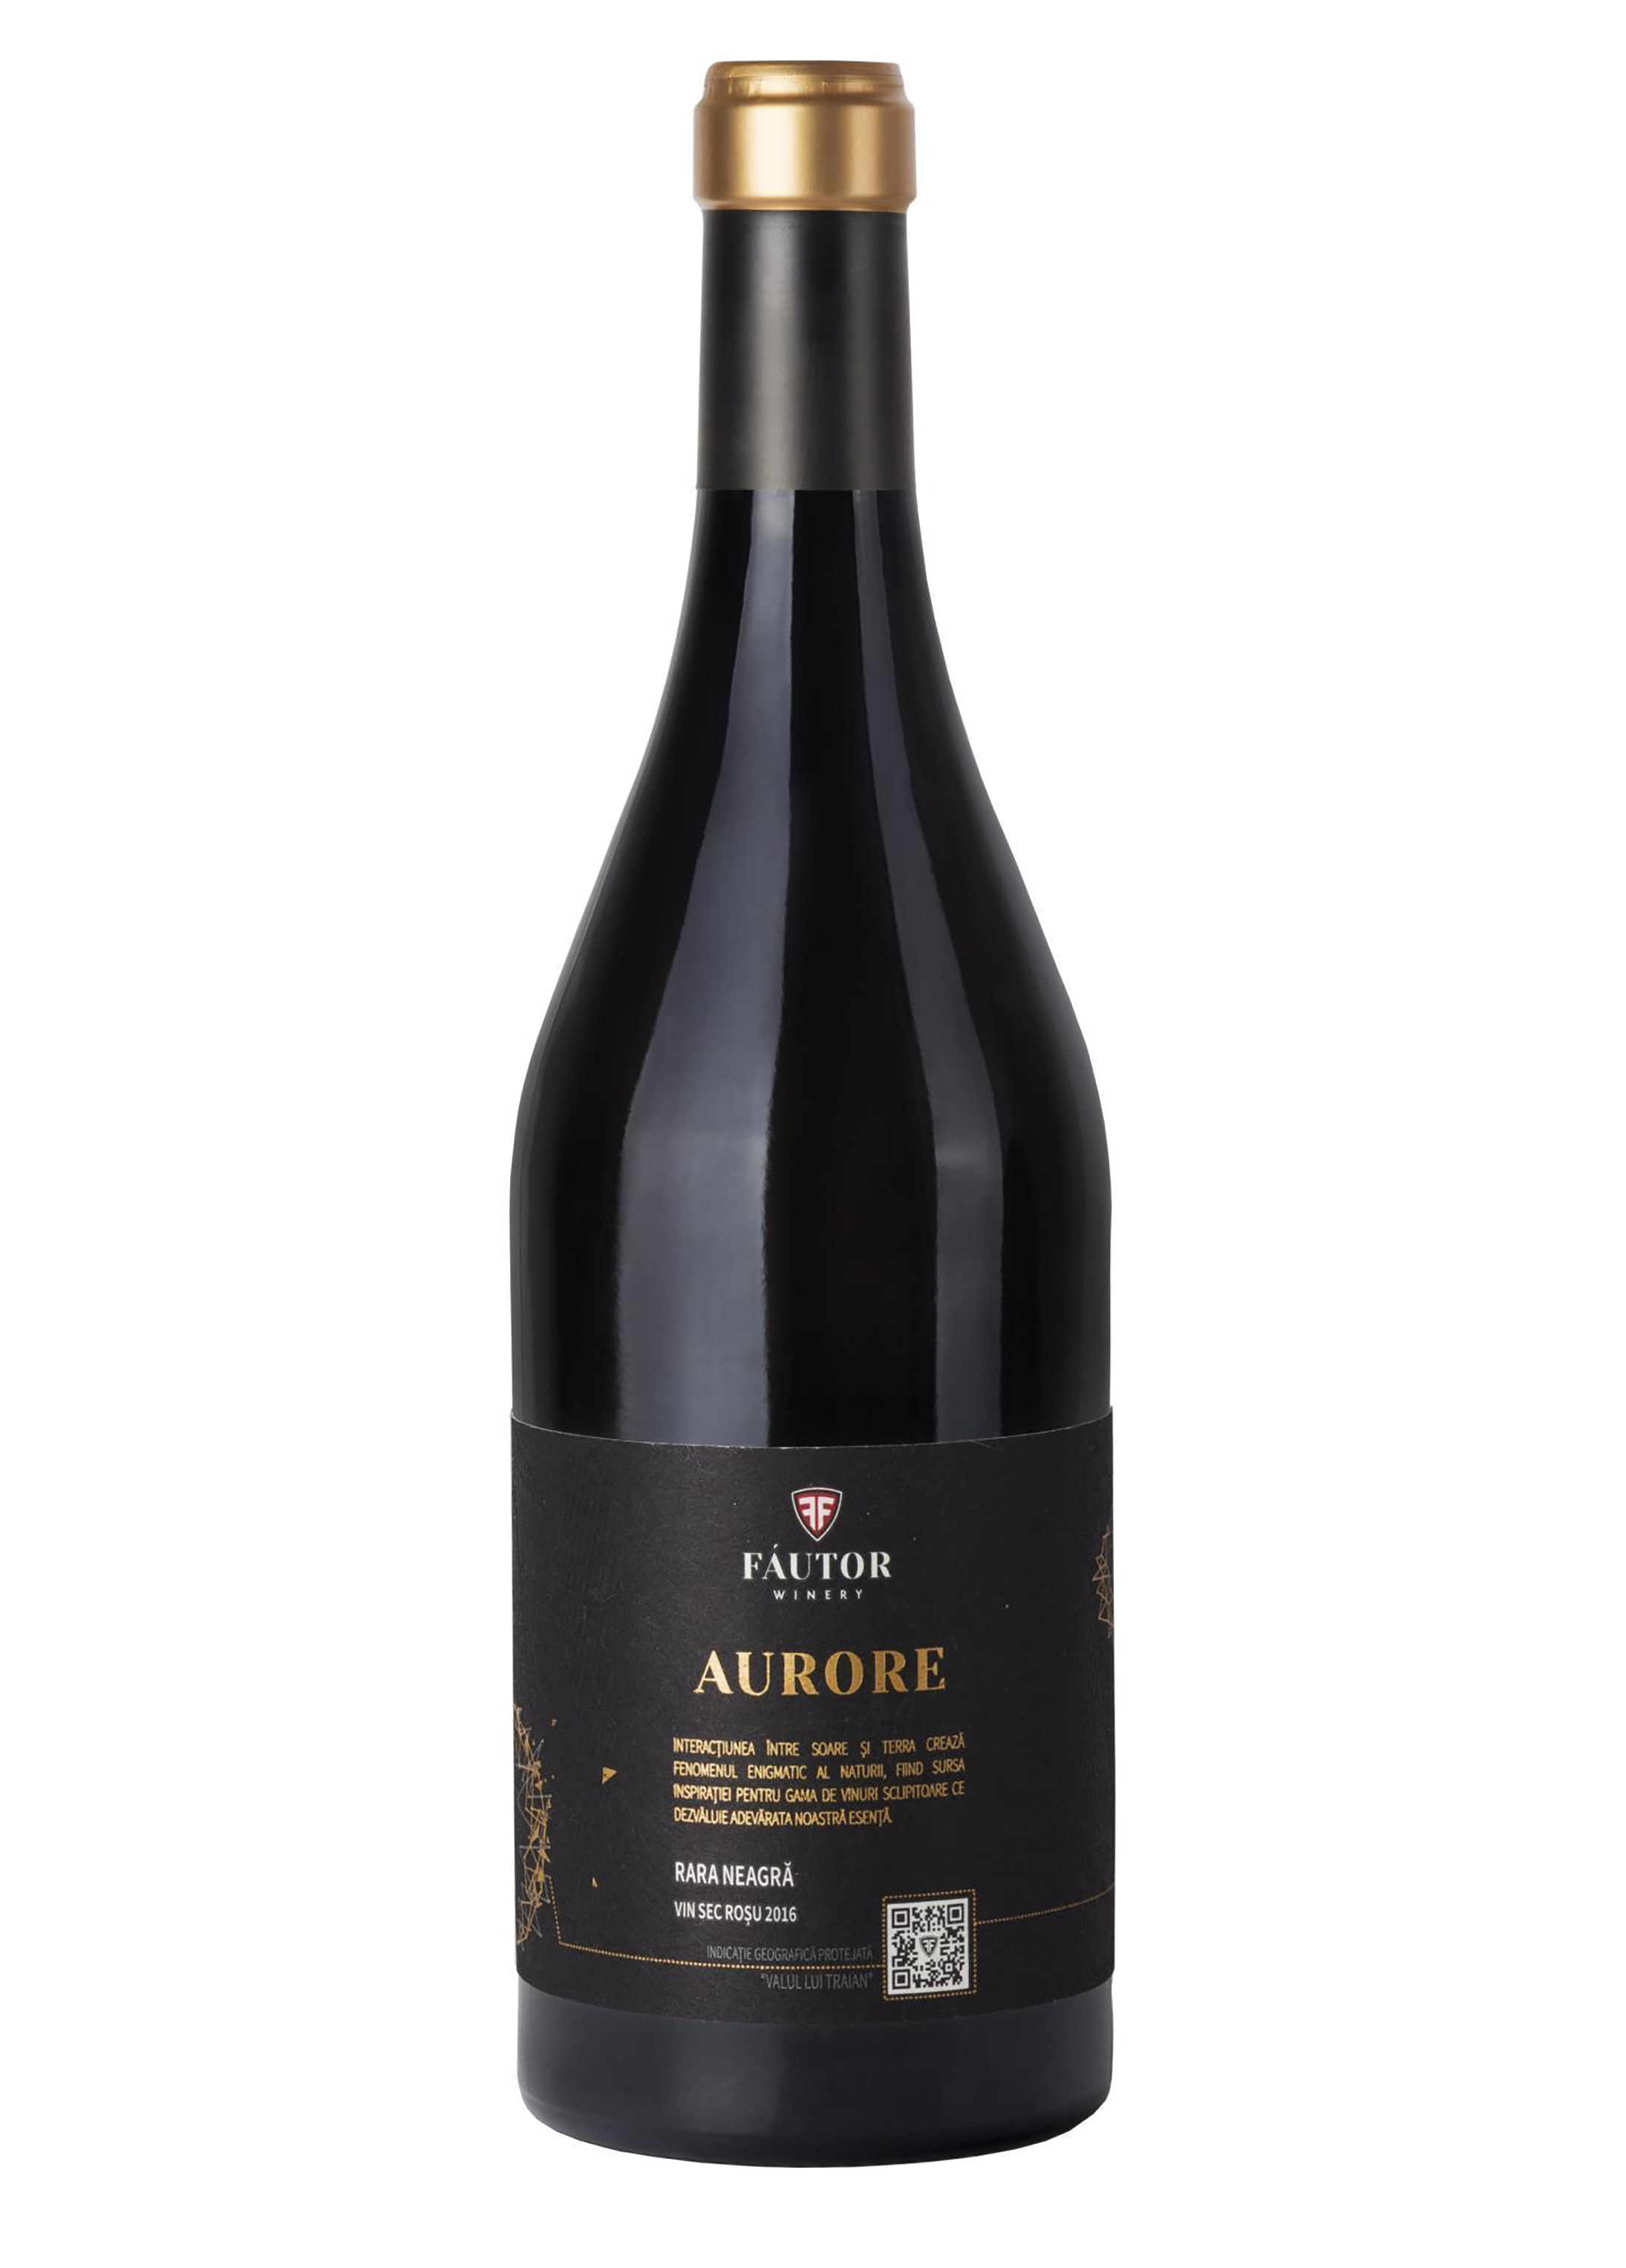  Vin rosu - Fautor, Aurore Rara, Neagra 2016 | Fautor Wine 